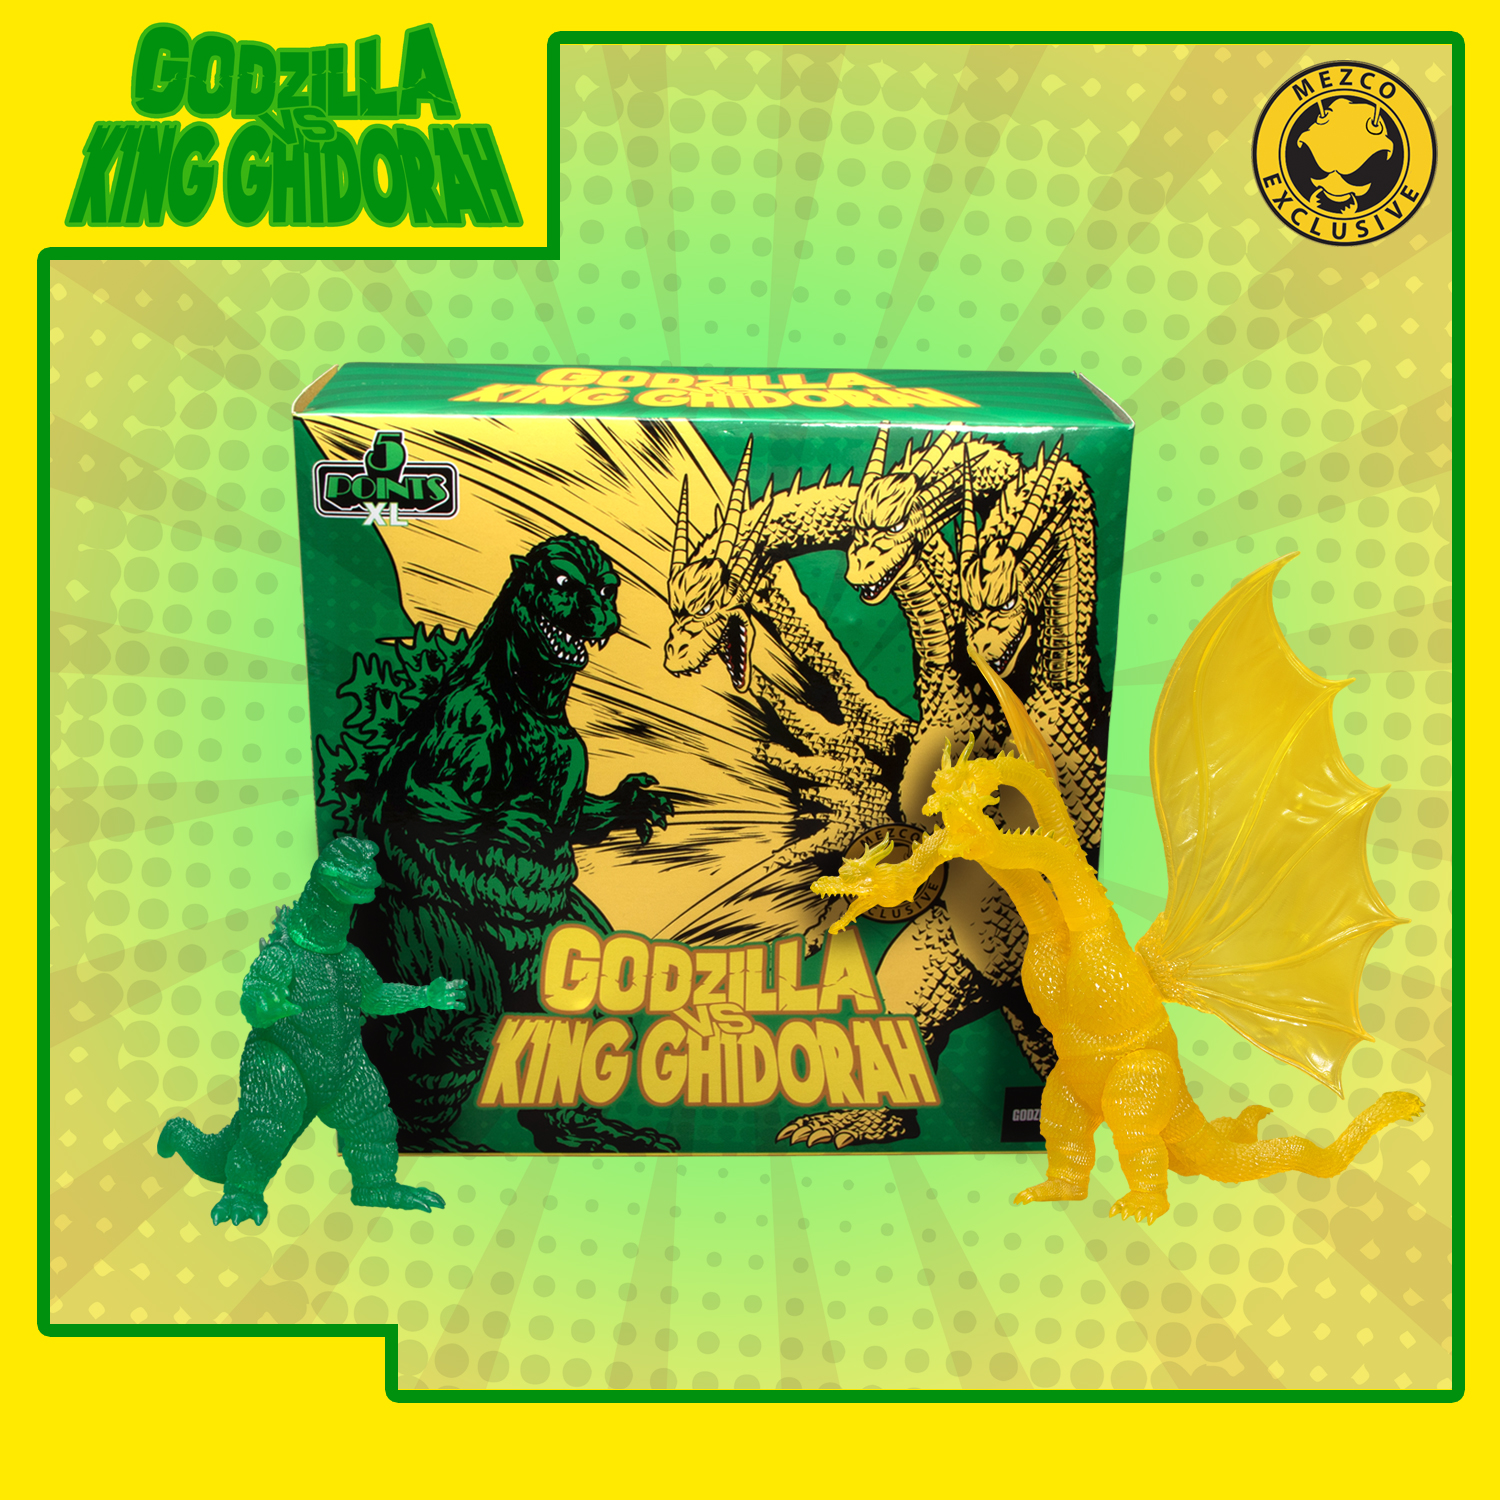 Godzilla x king ghidorah